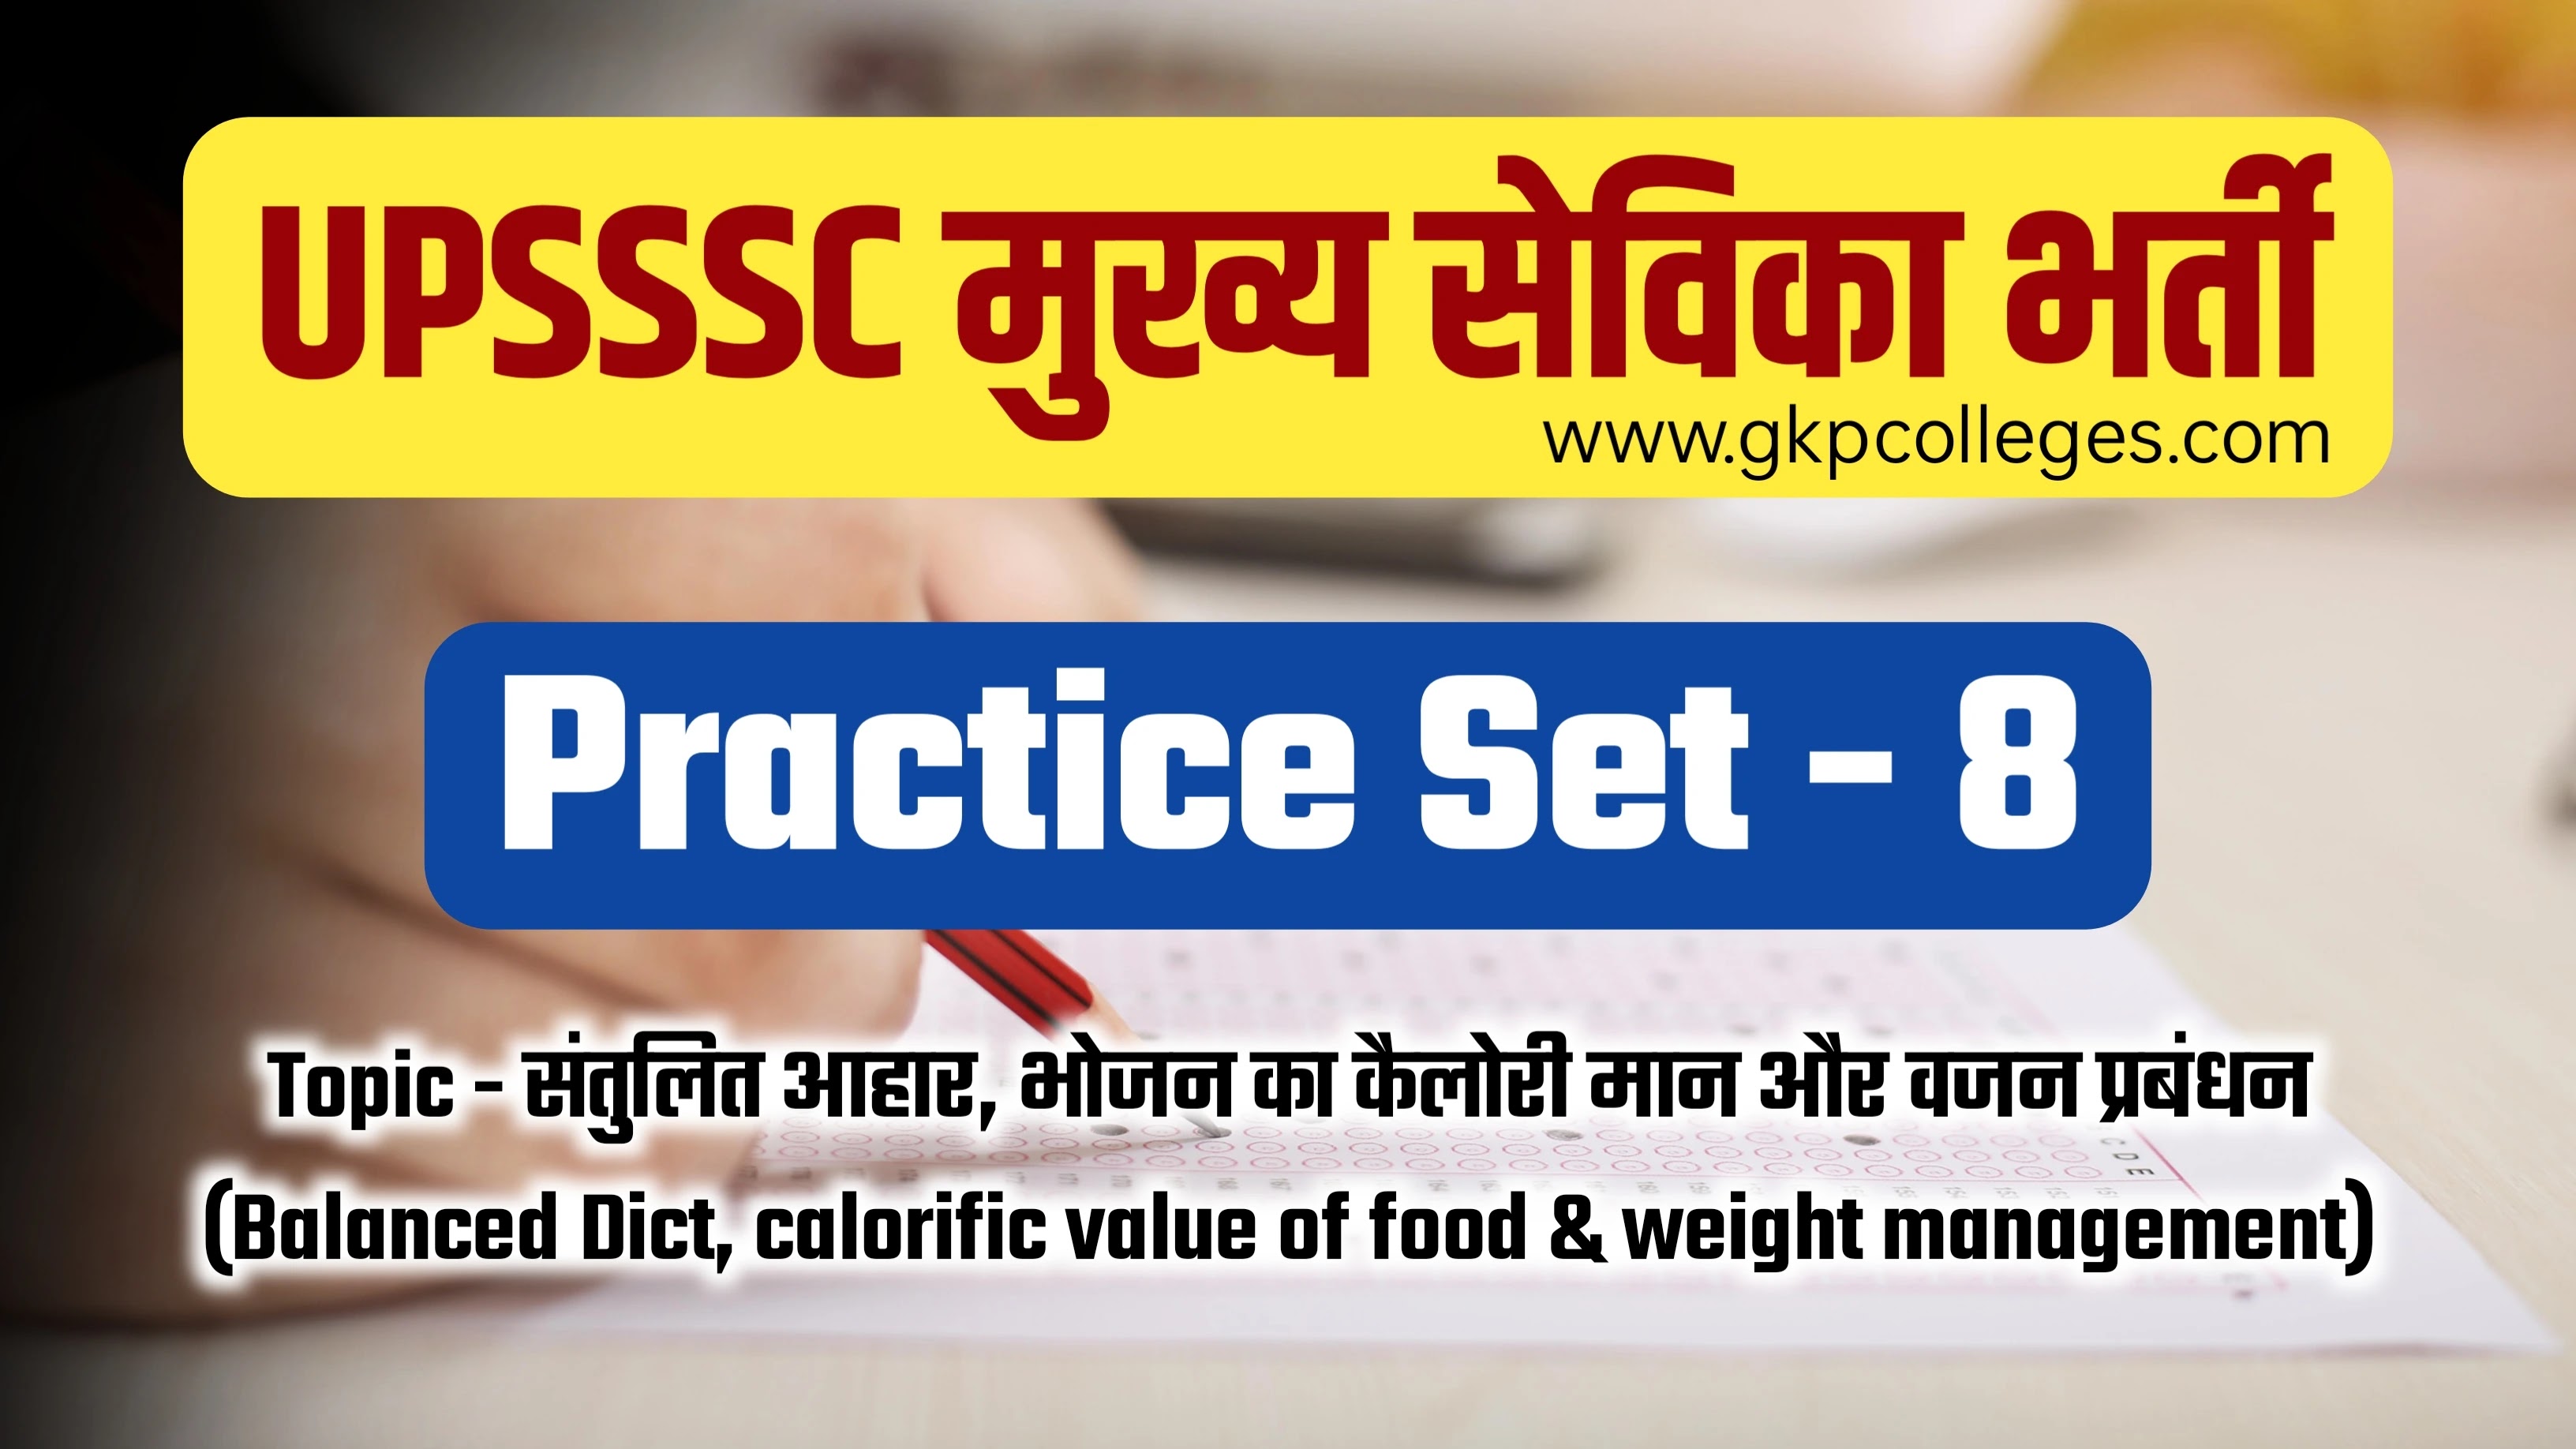 Practice Set - 8, UPSSSC Mukhya Sevika Recruitment 2022, संतुलित आहार, भोजन का कैलोरी मान और वजन प्रबंधन